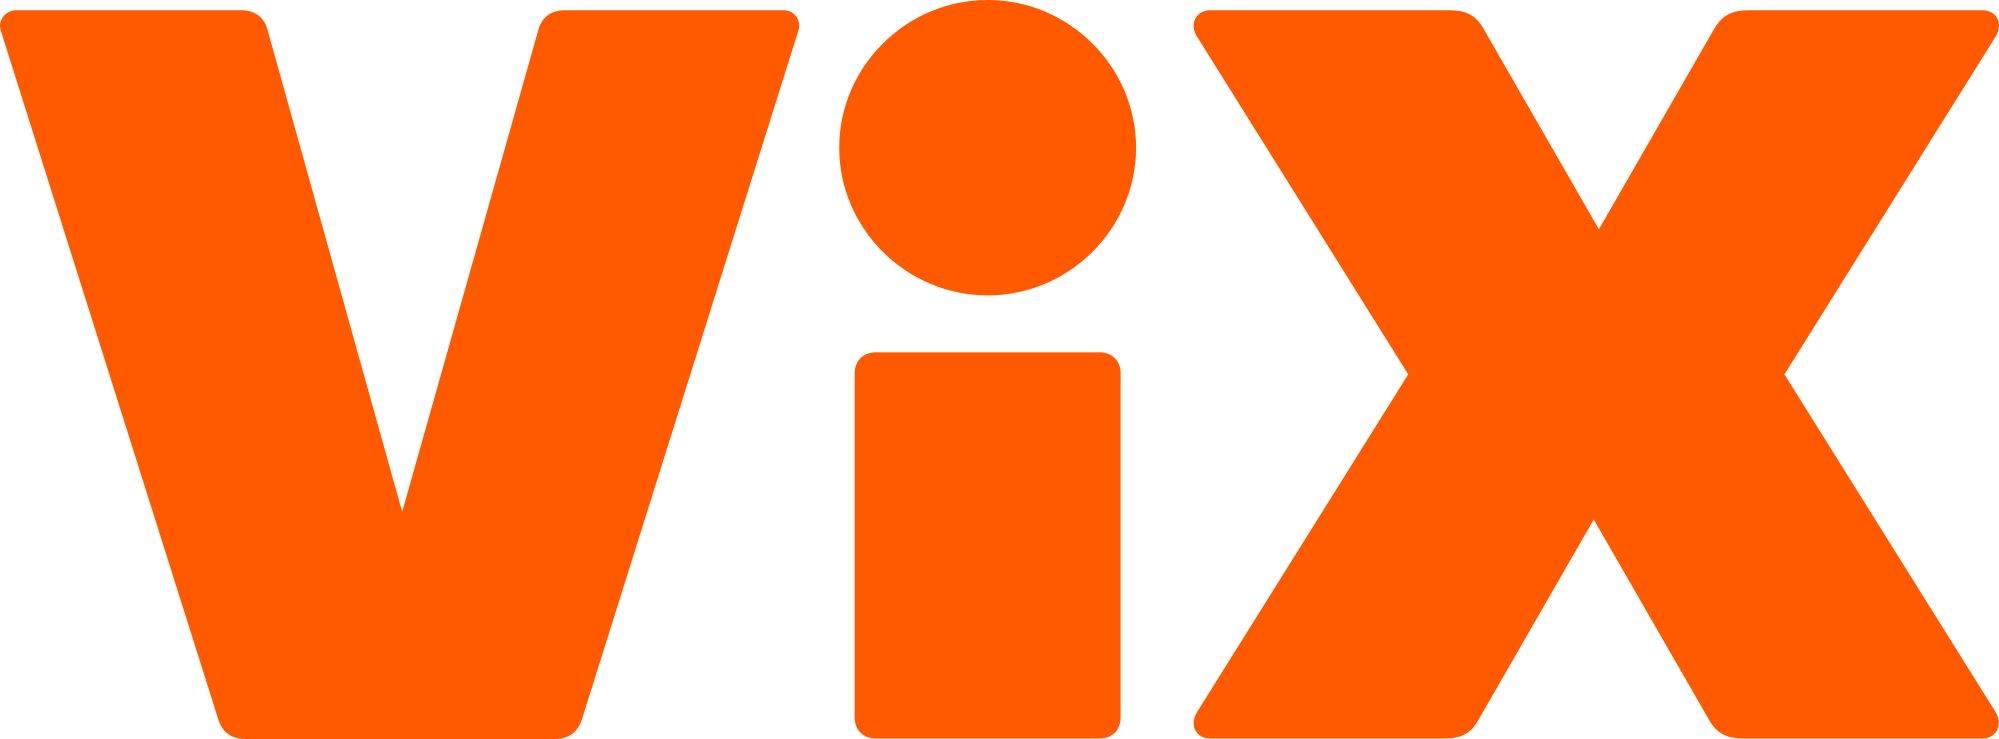 ViX Logo